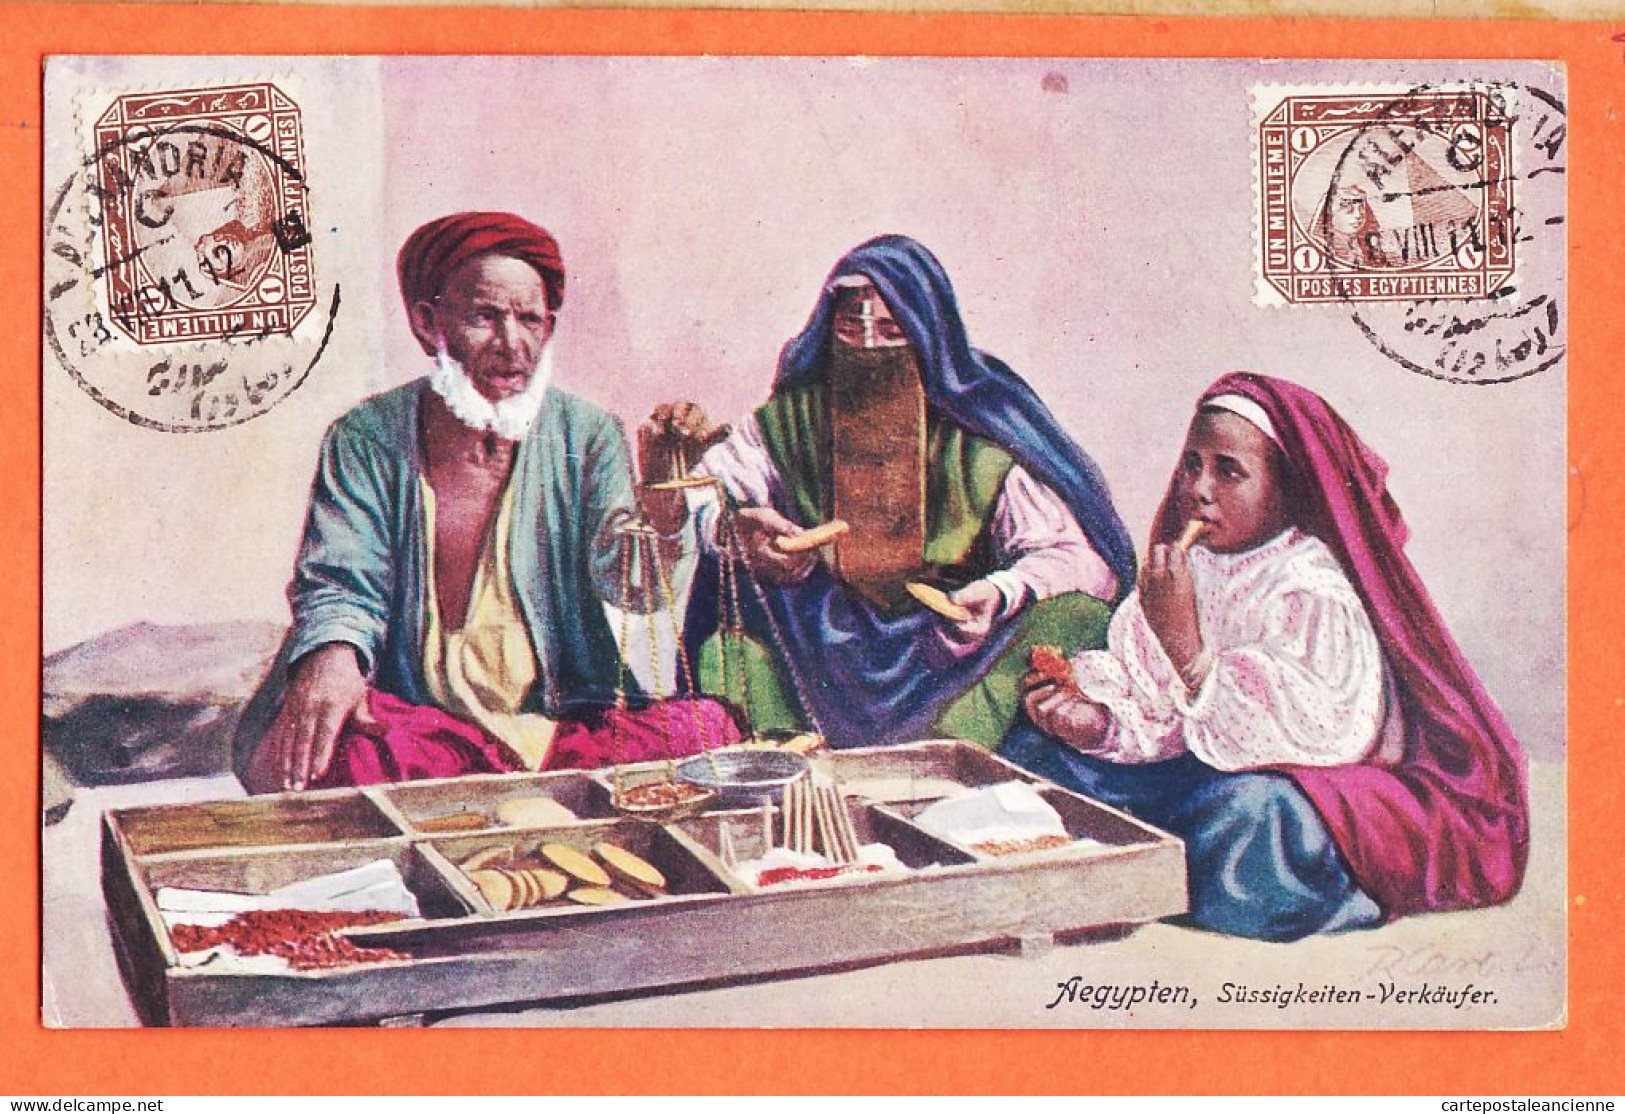 38955 / ⭐ AEGYPTEN Süssigkeiten Verkaufer ◉ EGYPTE Vendeur Friandises 1911 à Jeanne LEVECQUE Nanterre ◉ WANDERER 1336 - Persons